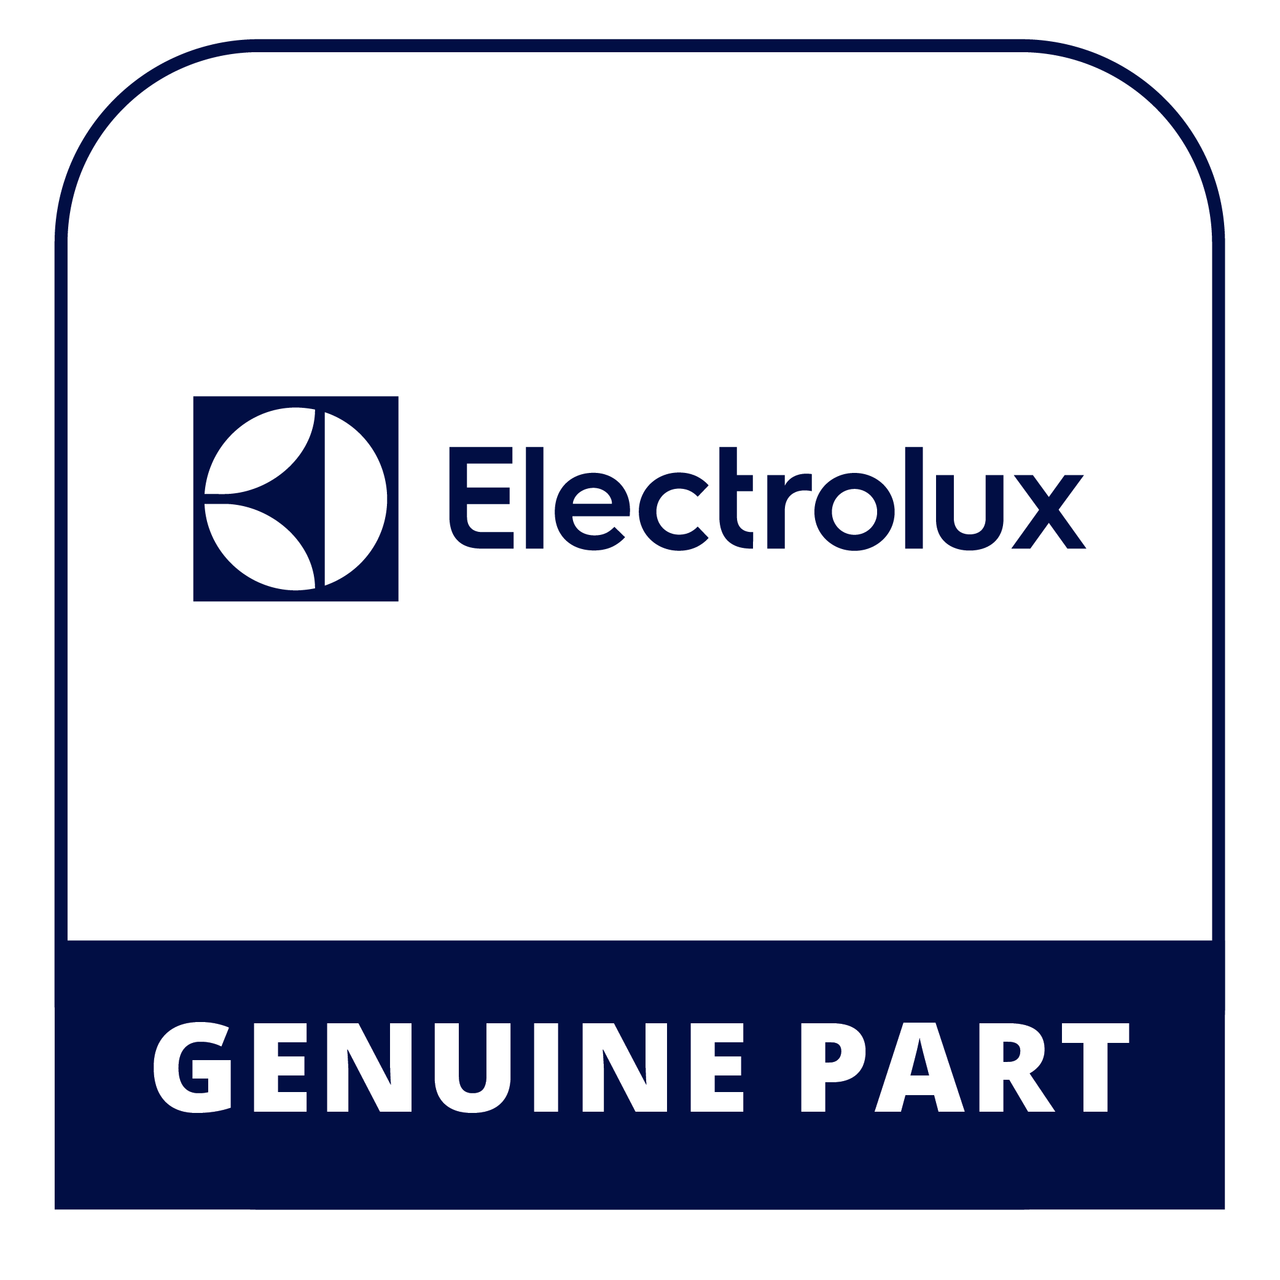 Frigidaire - Electrolux 316472007 Panel - Genuine Electrolux Part